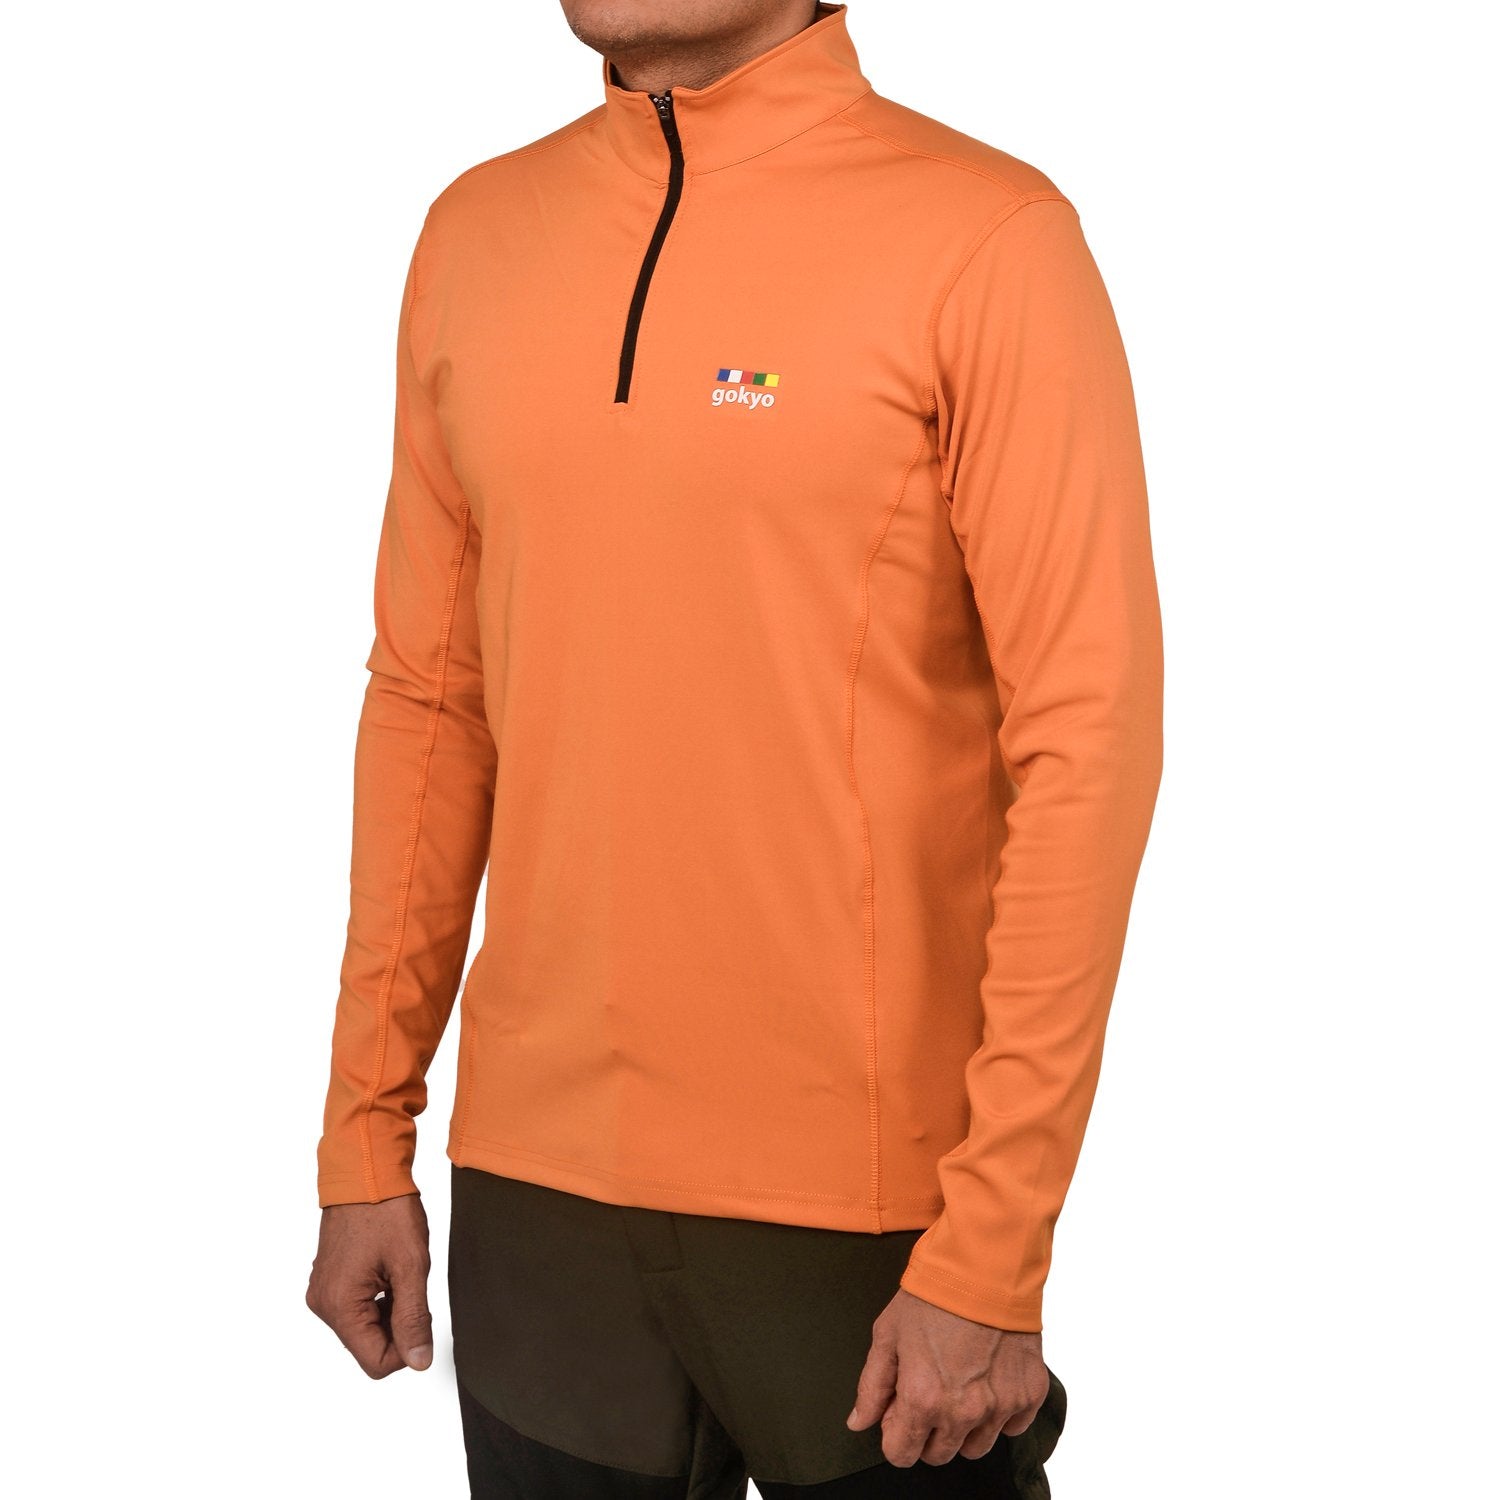 Buy K2 Ultrasoft Trekking Tshirt at Gokyo Outdoor Clothing & Gear